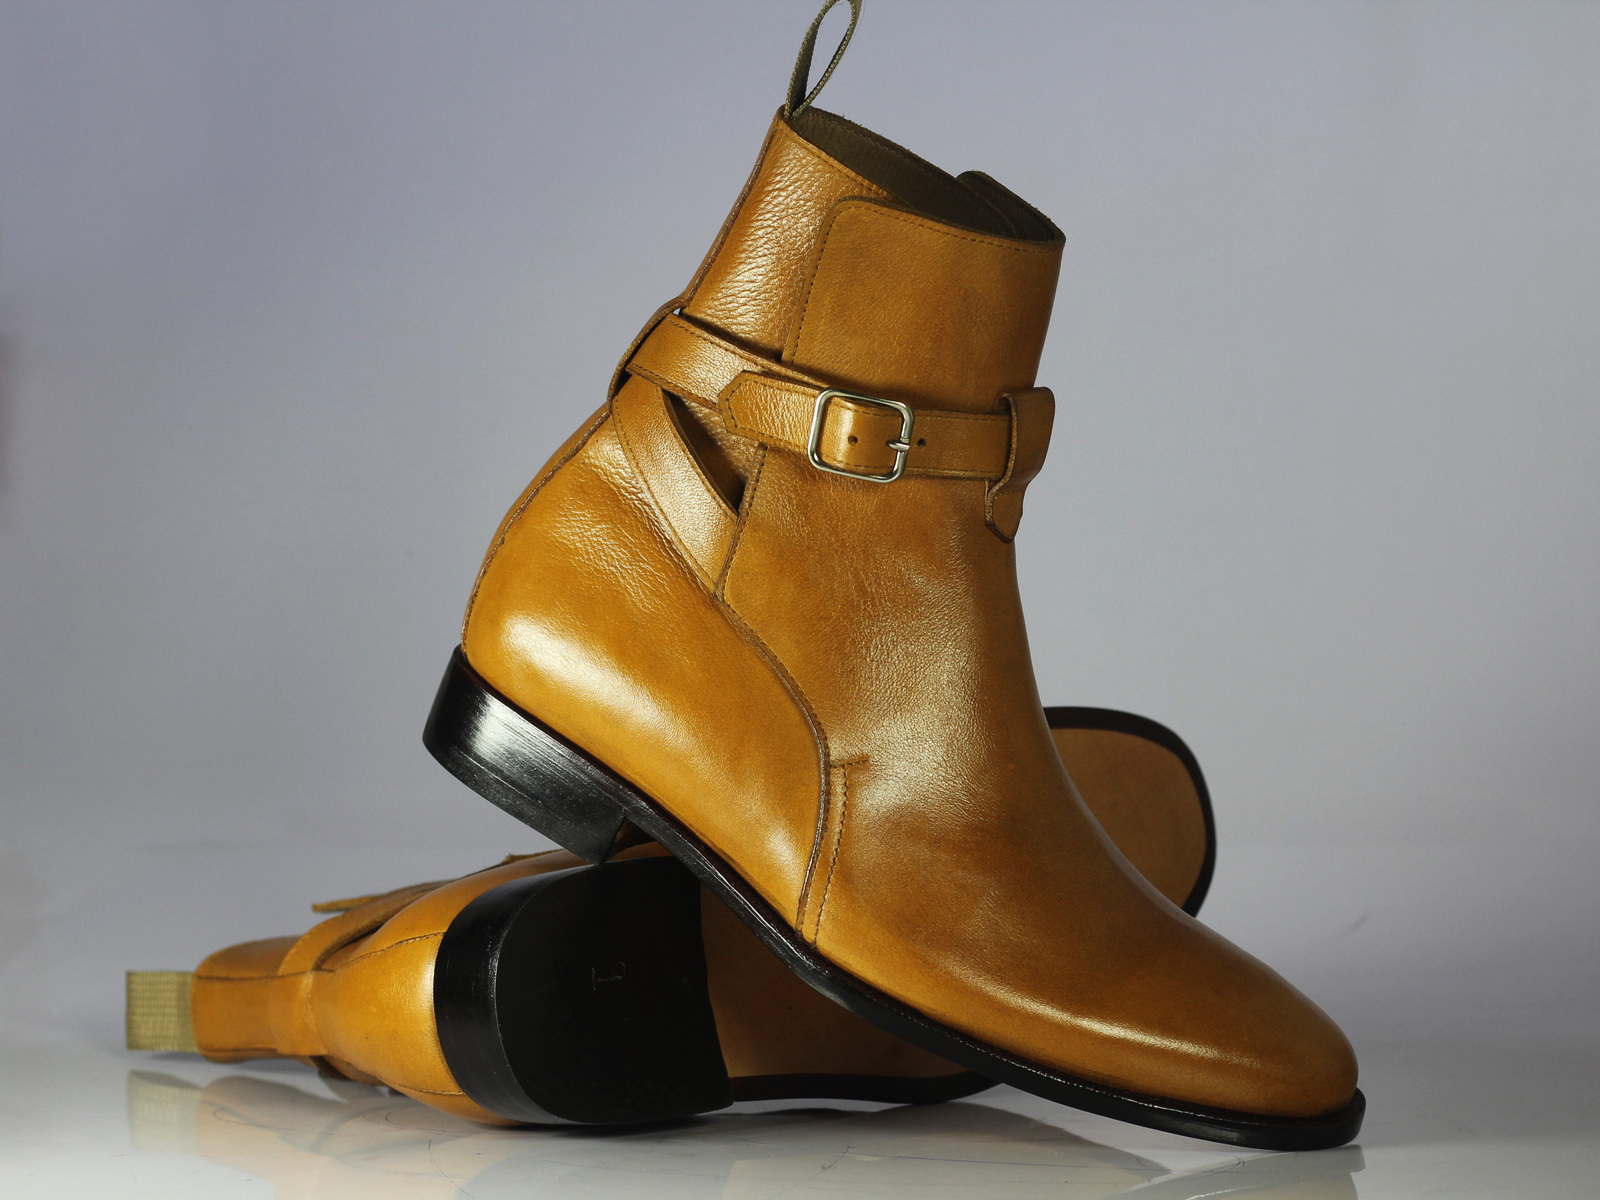 Primary image for Handmade Men's Ankle High Tan Leather Boots, Men Designer Jodhpurs Boots